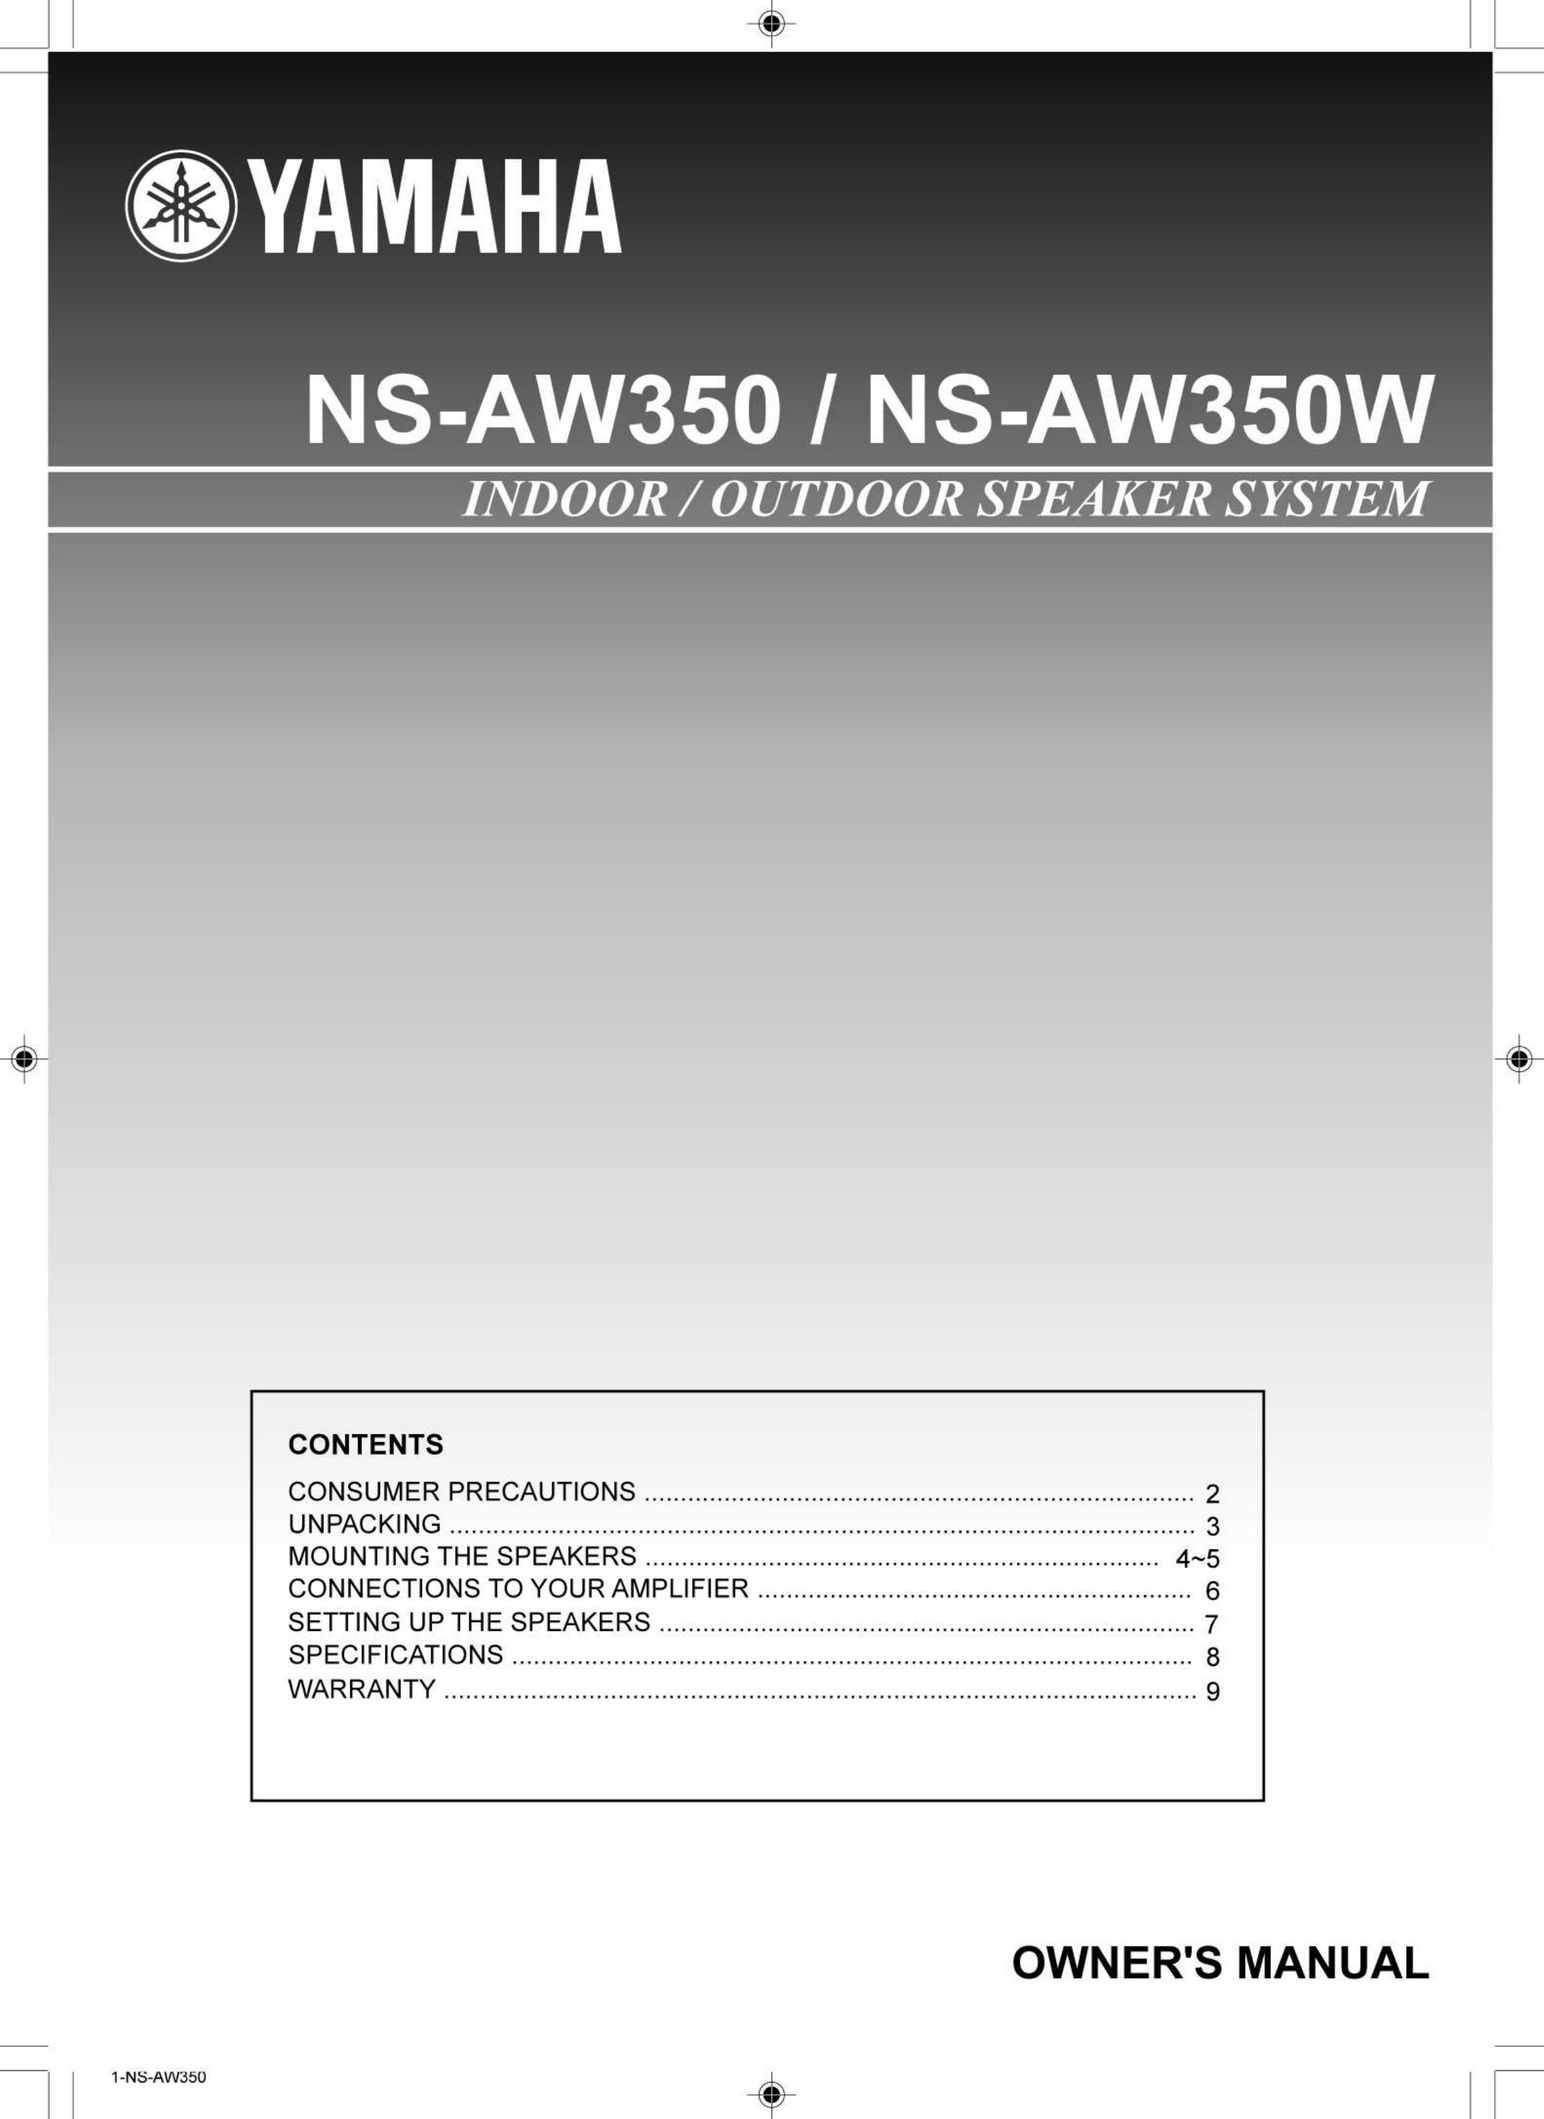 Yamaha NS-AW350 Speaker System User Manual